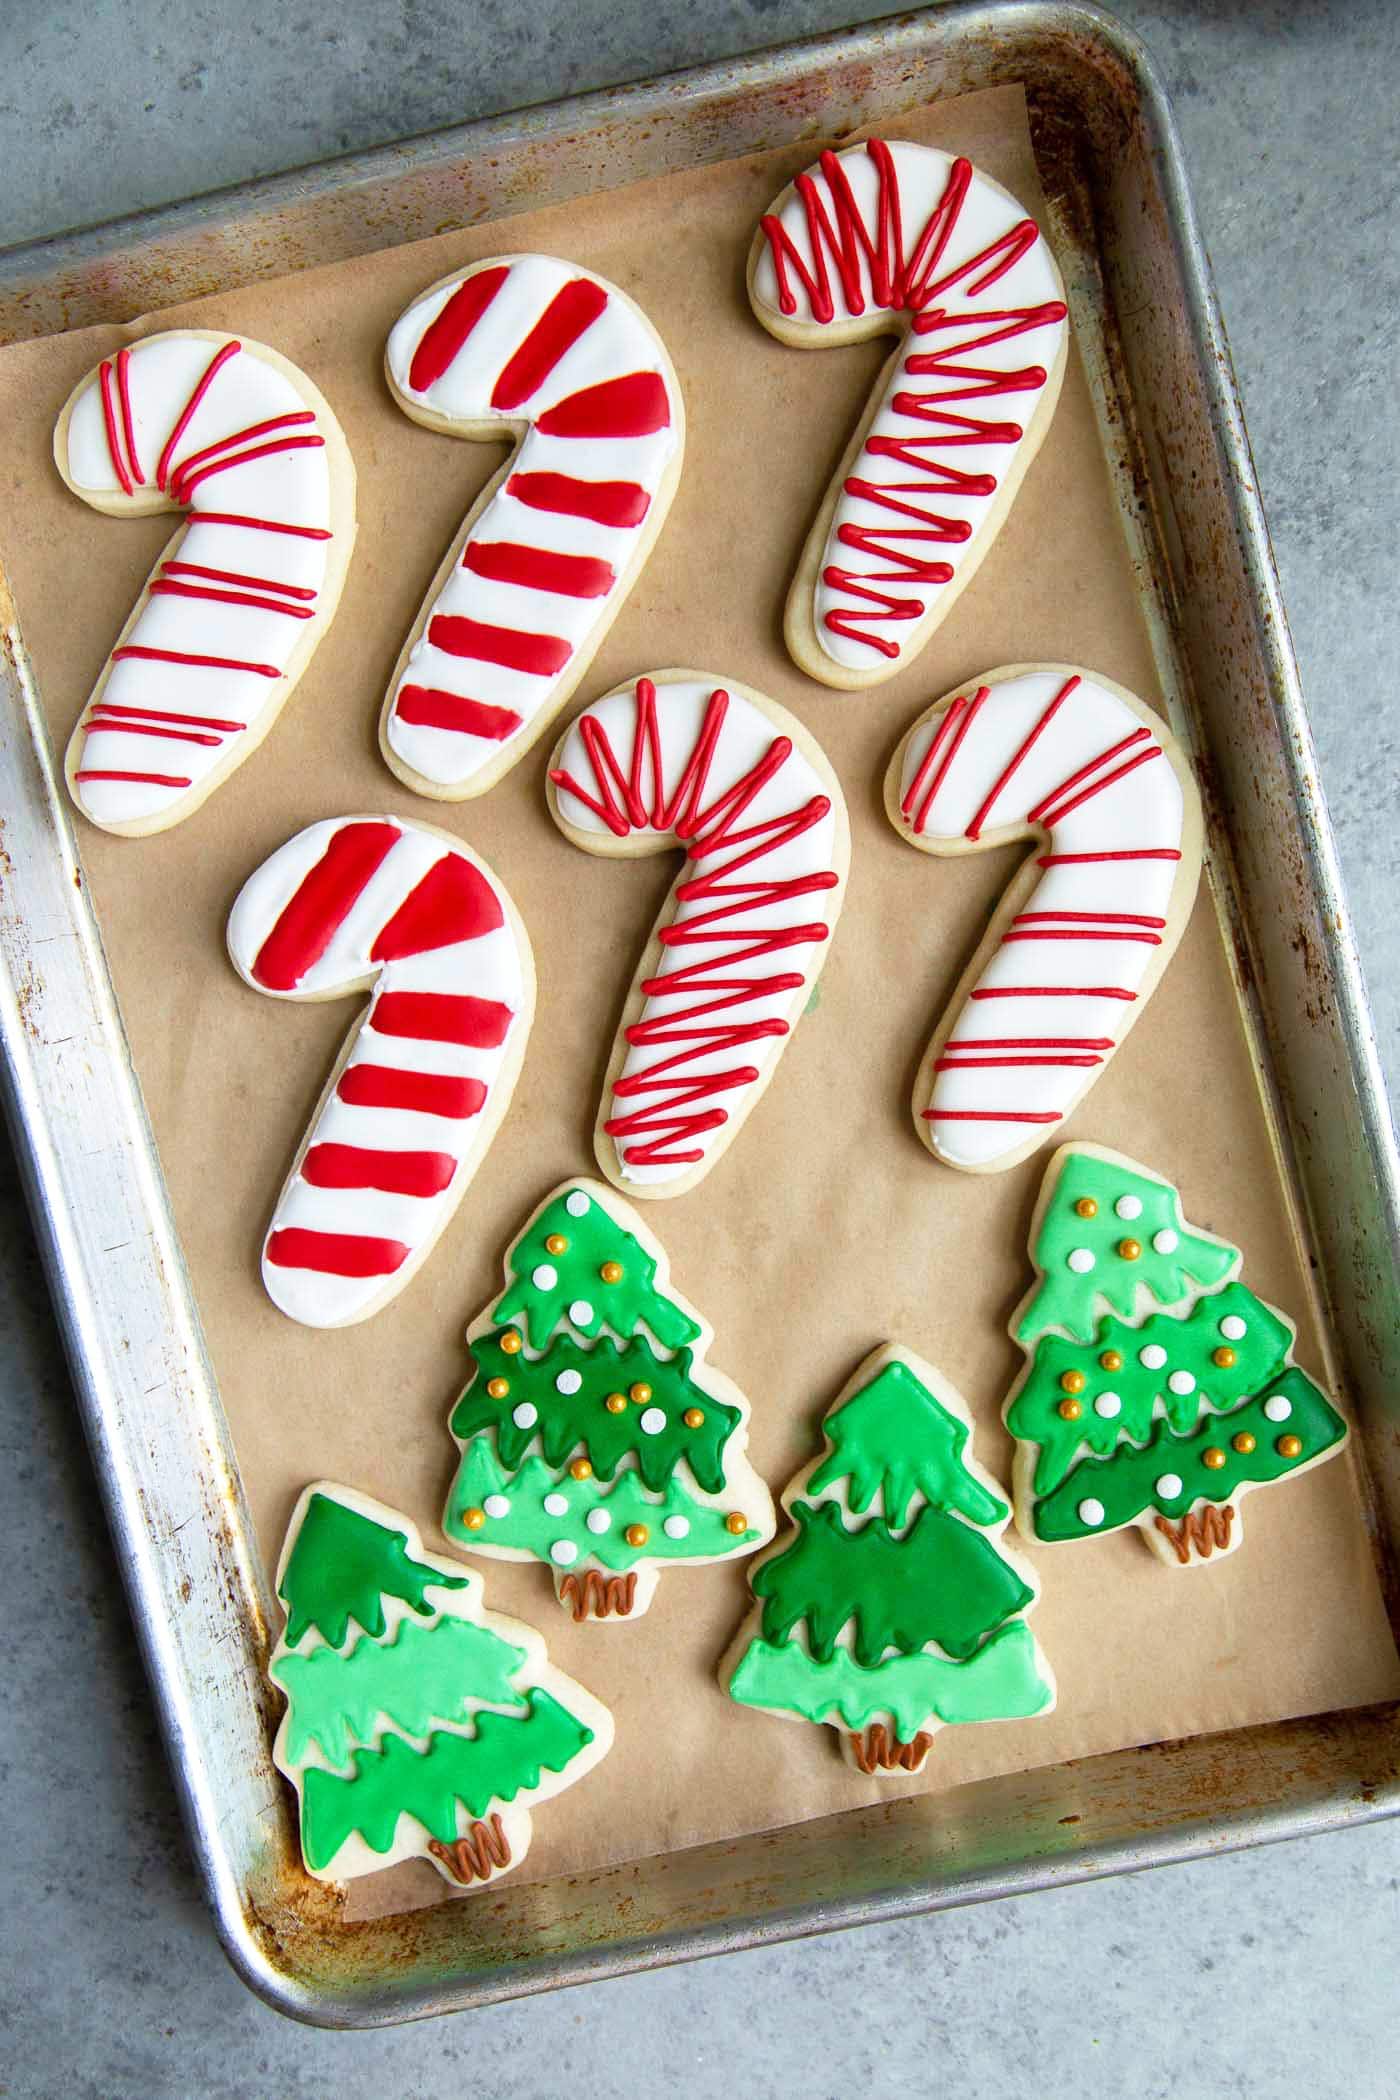 Royal Icing decorated sugar cookies